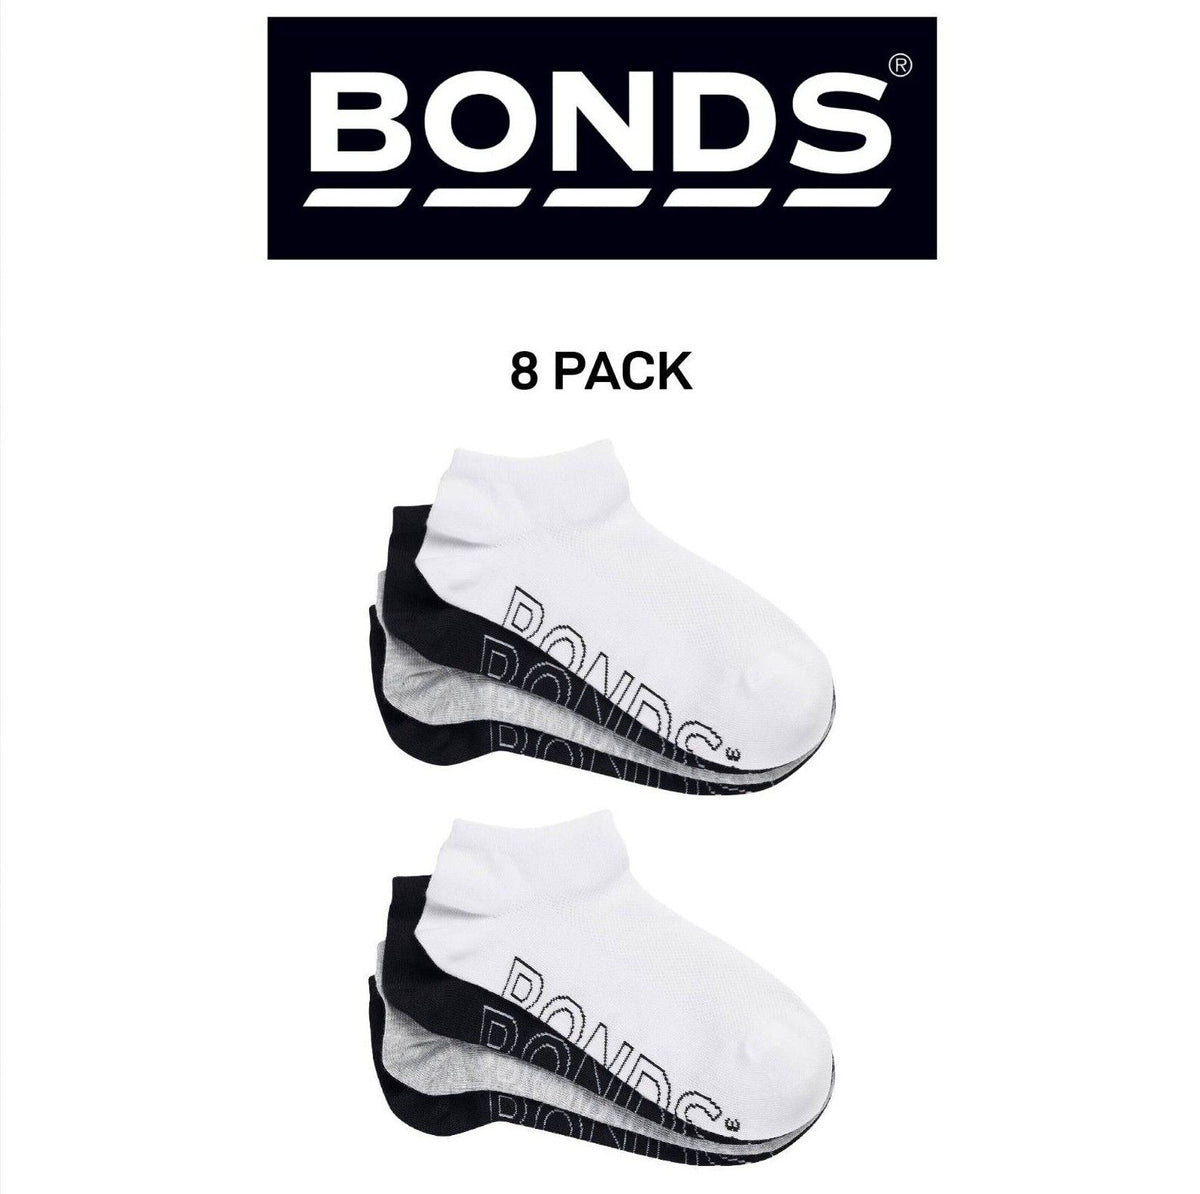 Bonds Womens Lightweight Low Cut Smooth Comfy Stay-Put Fit Socks 8 Pack LXPV4N